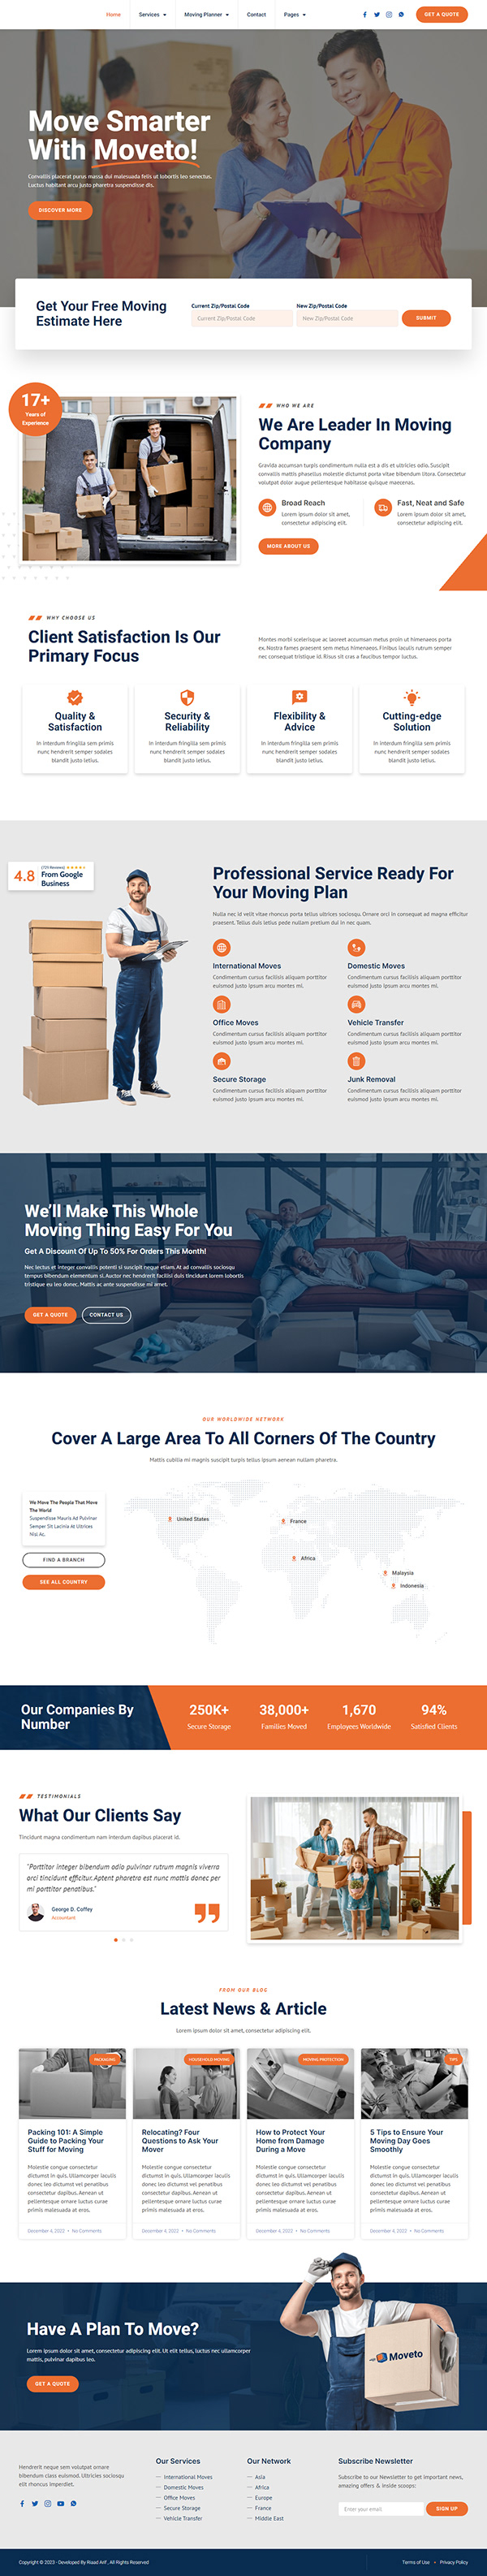 Moving Company WordPress Website | Web Design